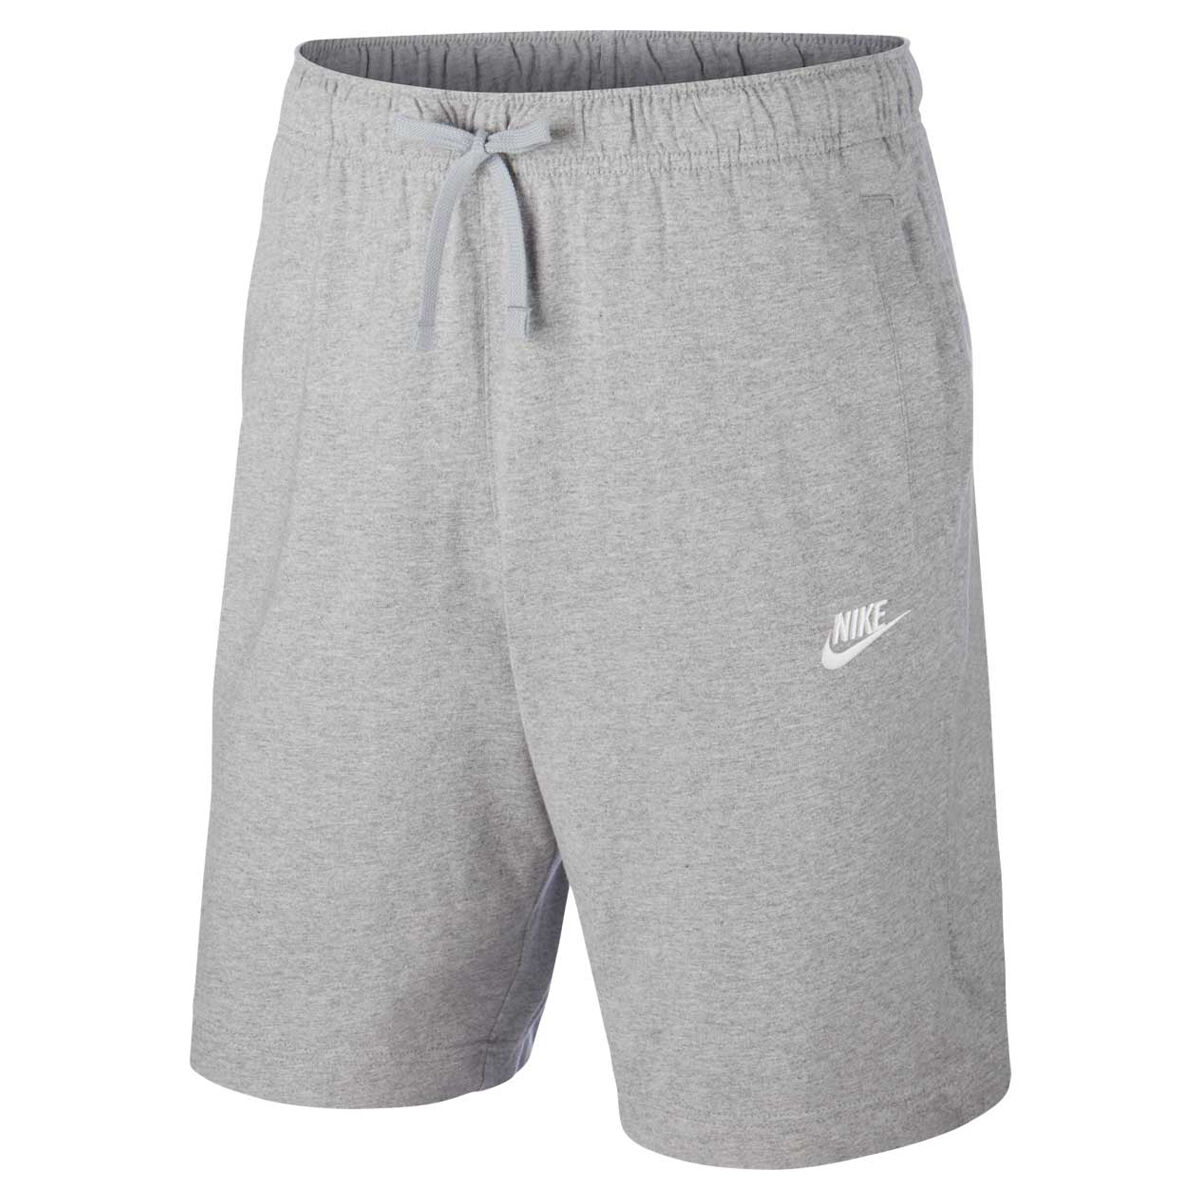 nike jersey shorts in grey